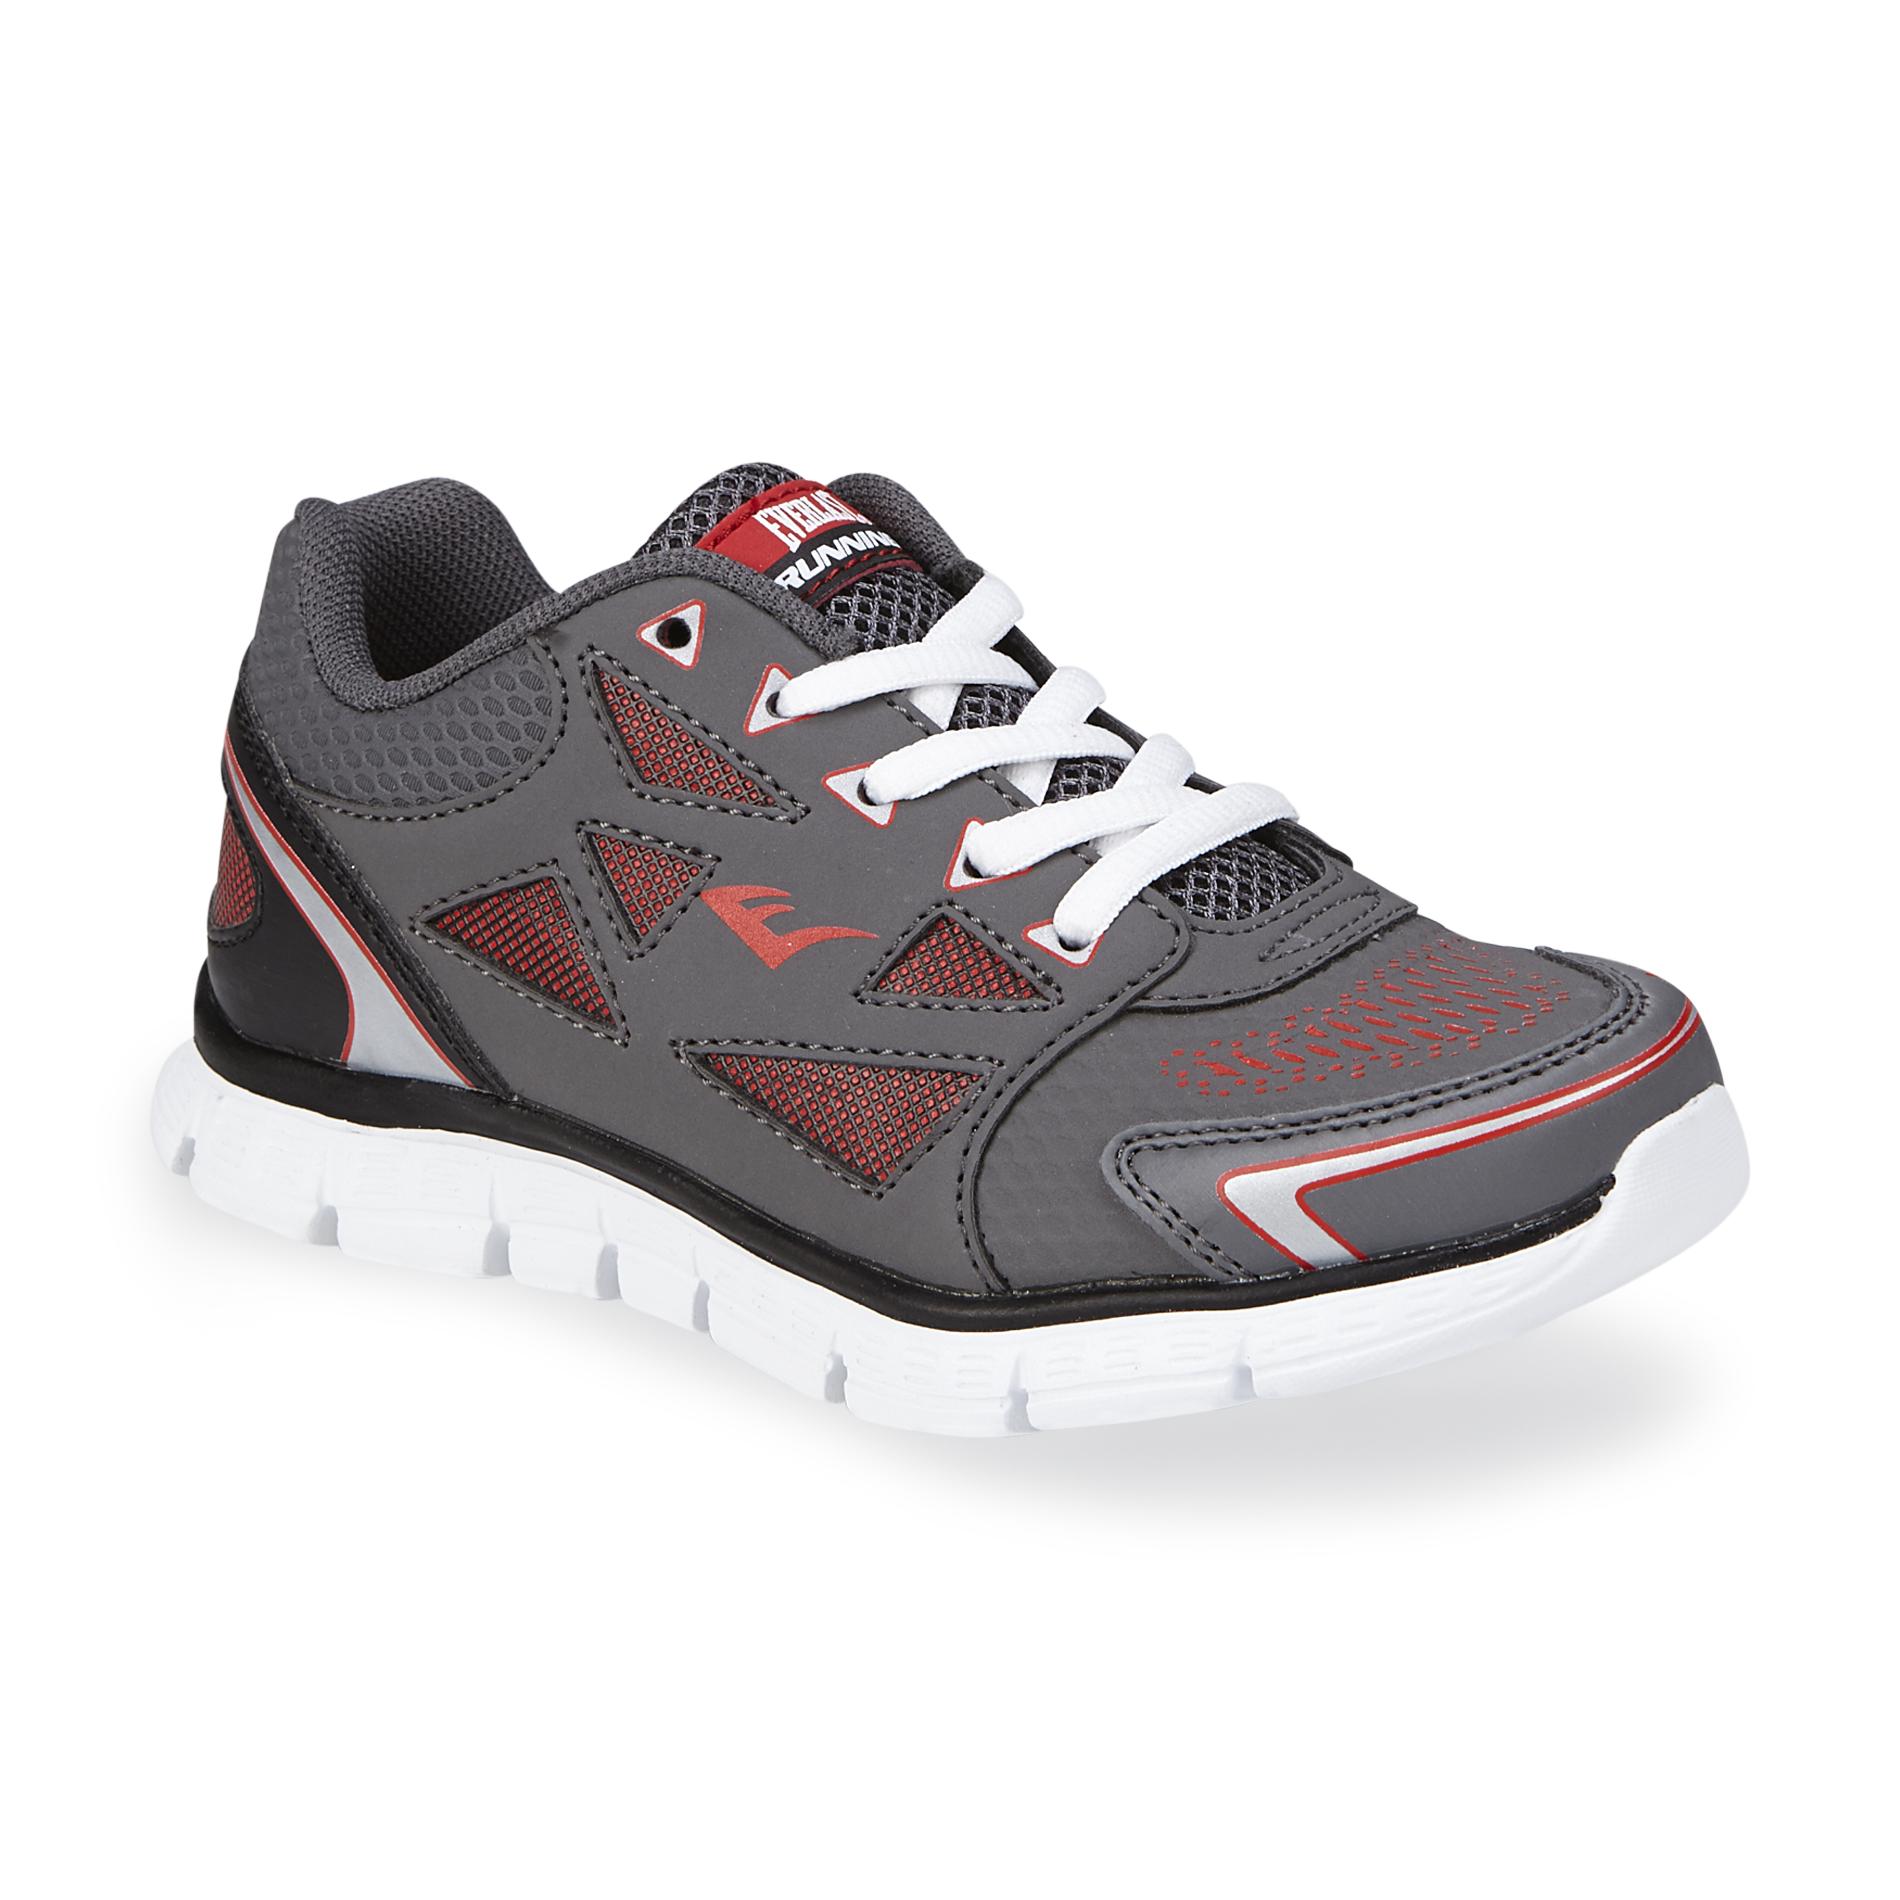 Athletech Boy's Sprint Gray/Red Running Shoe